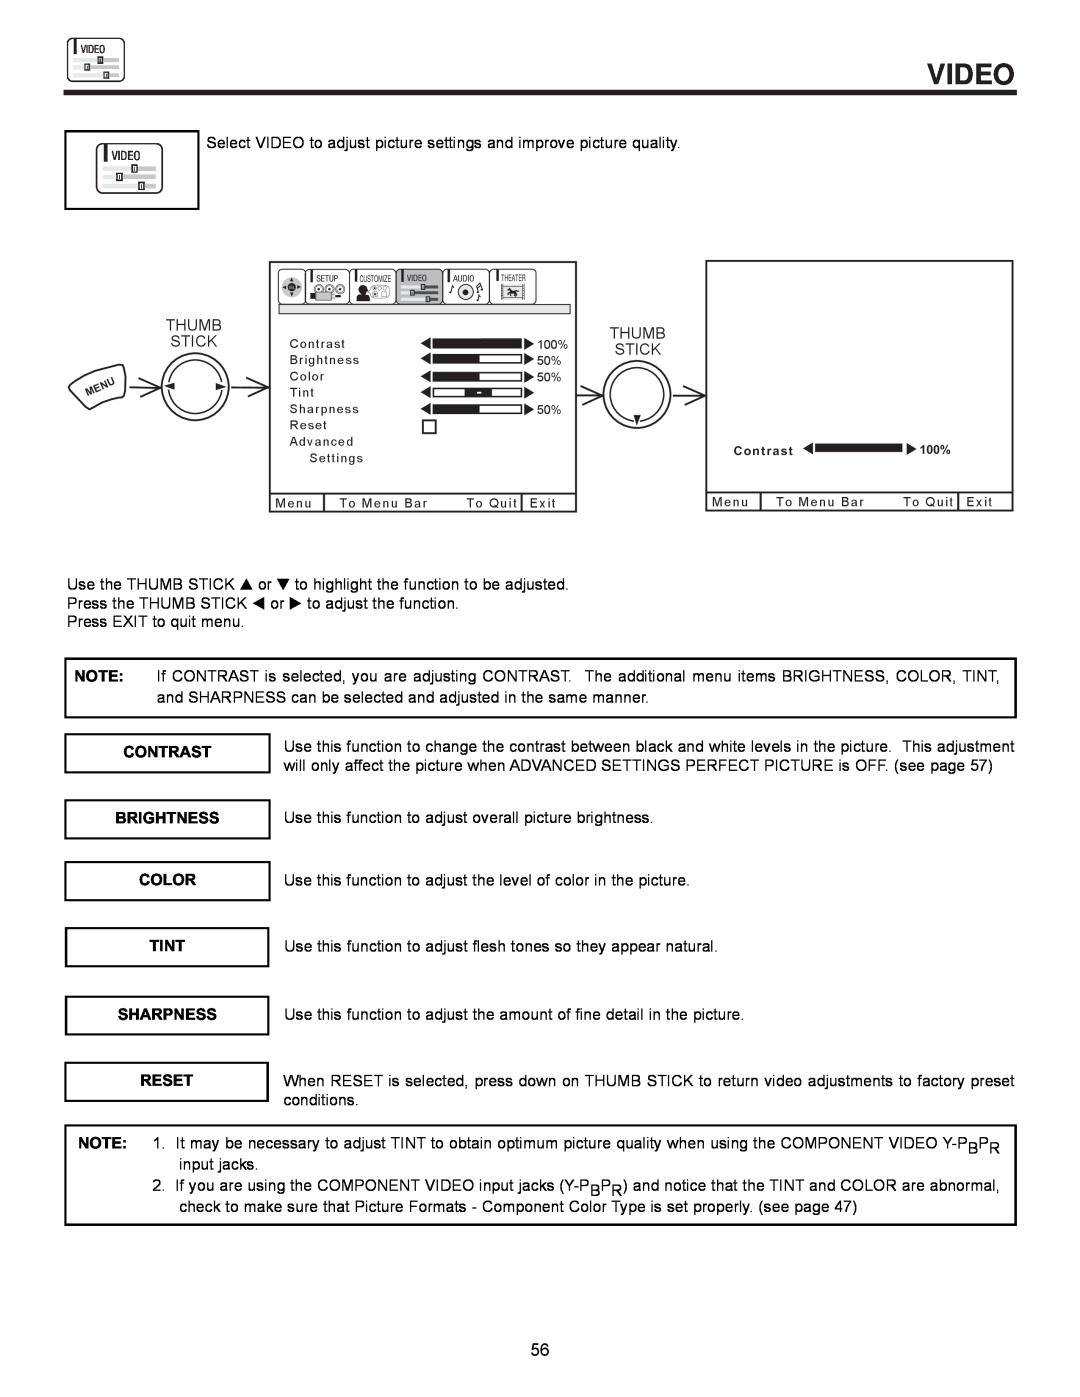 Hitachi 61UWX10B important safety instructions Video, Contrast Brightness Color Tint Sharpness Reset 